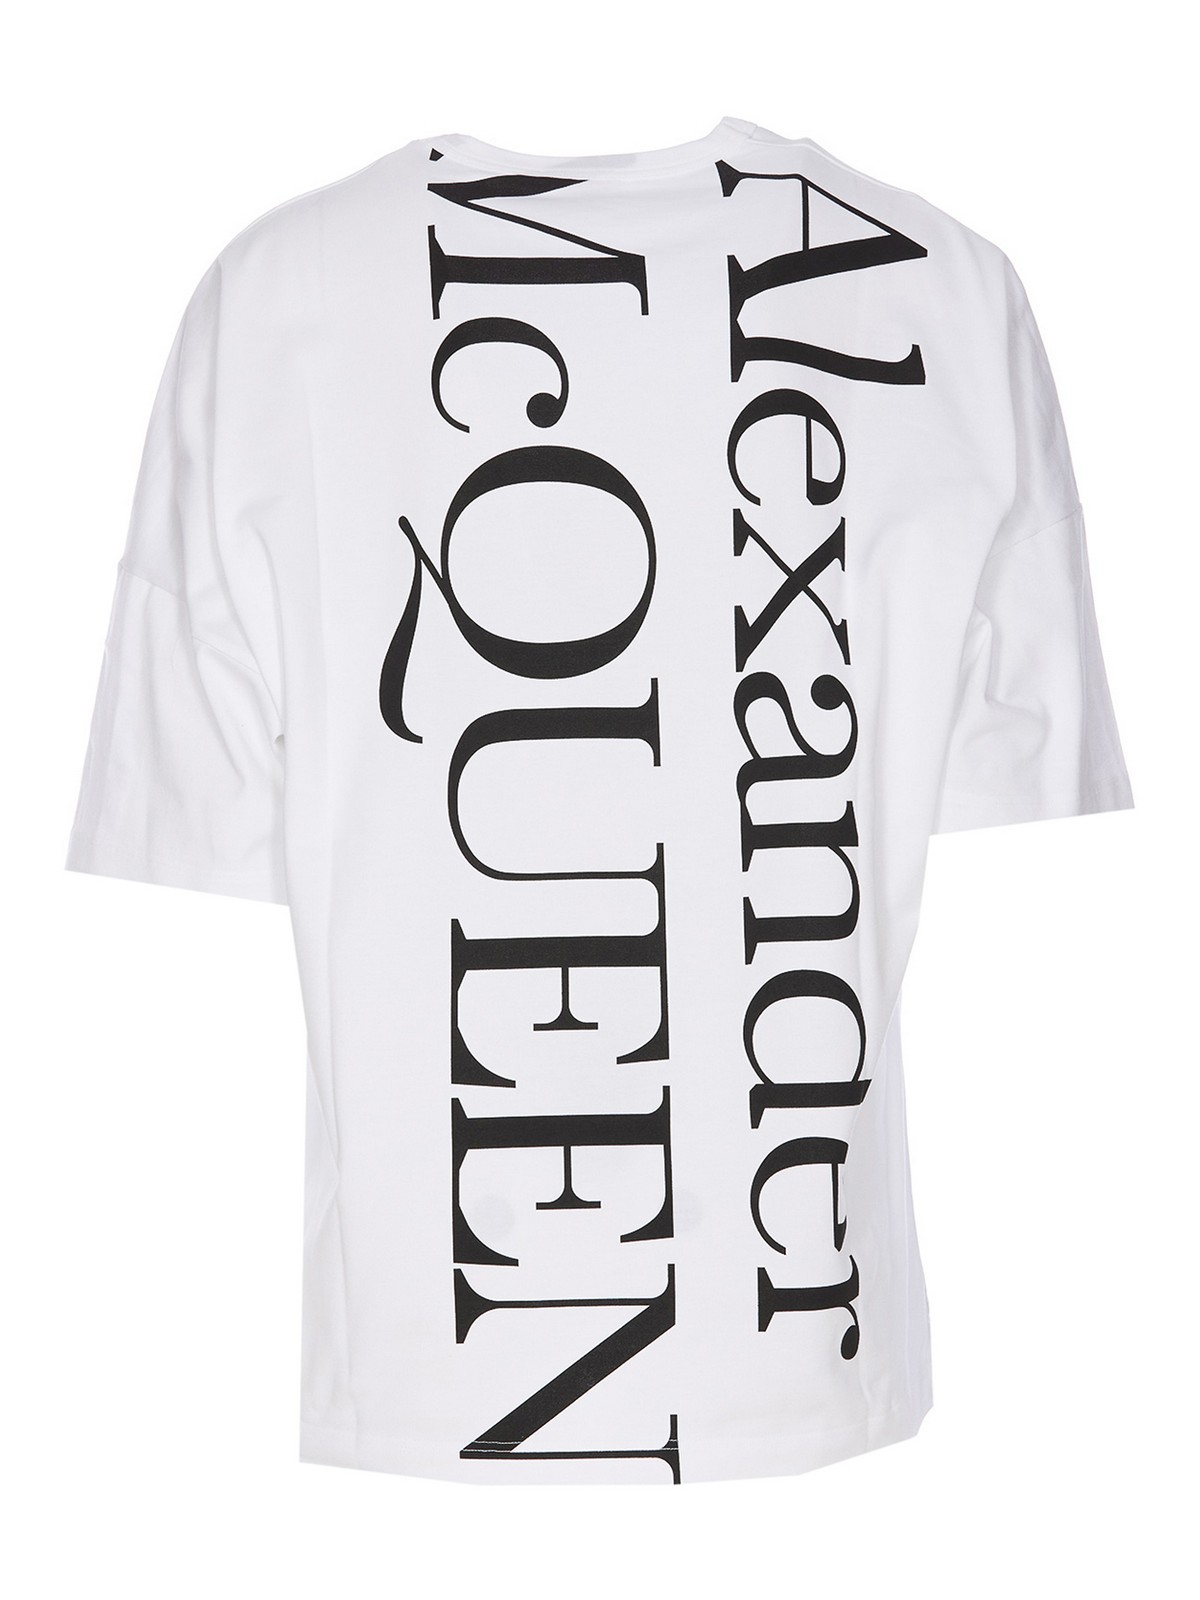 Shirts Alexander Mcqueen - Exploded logo tshirt - 750655QVZ060900